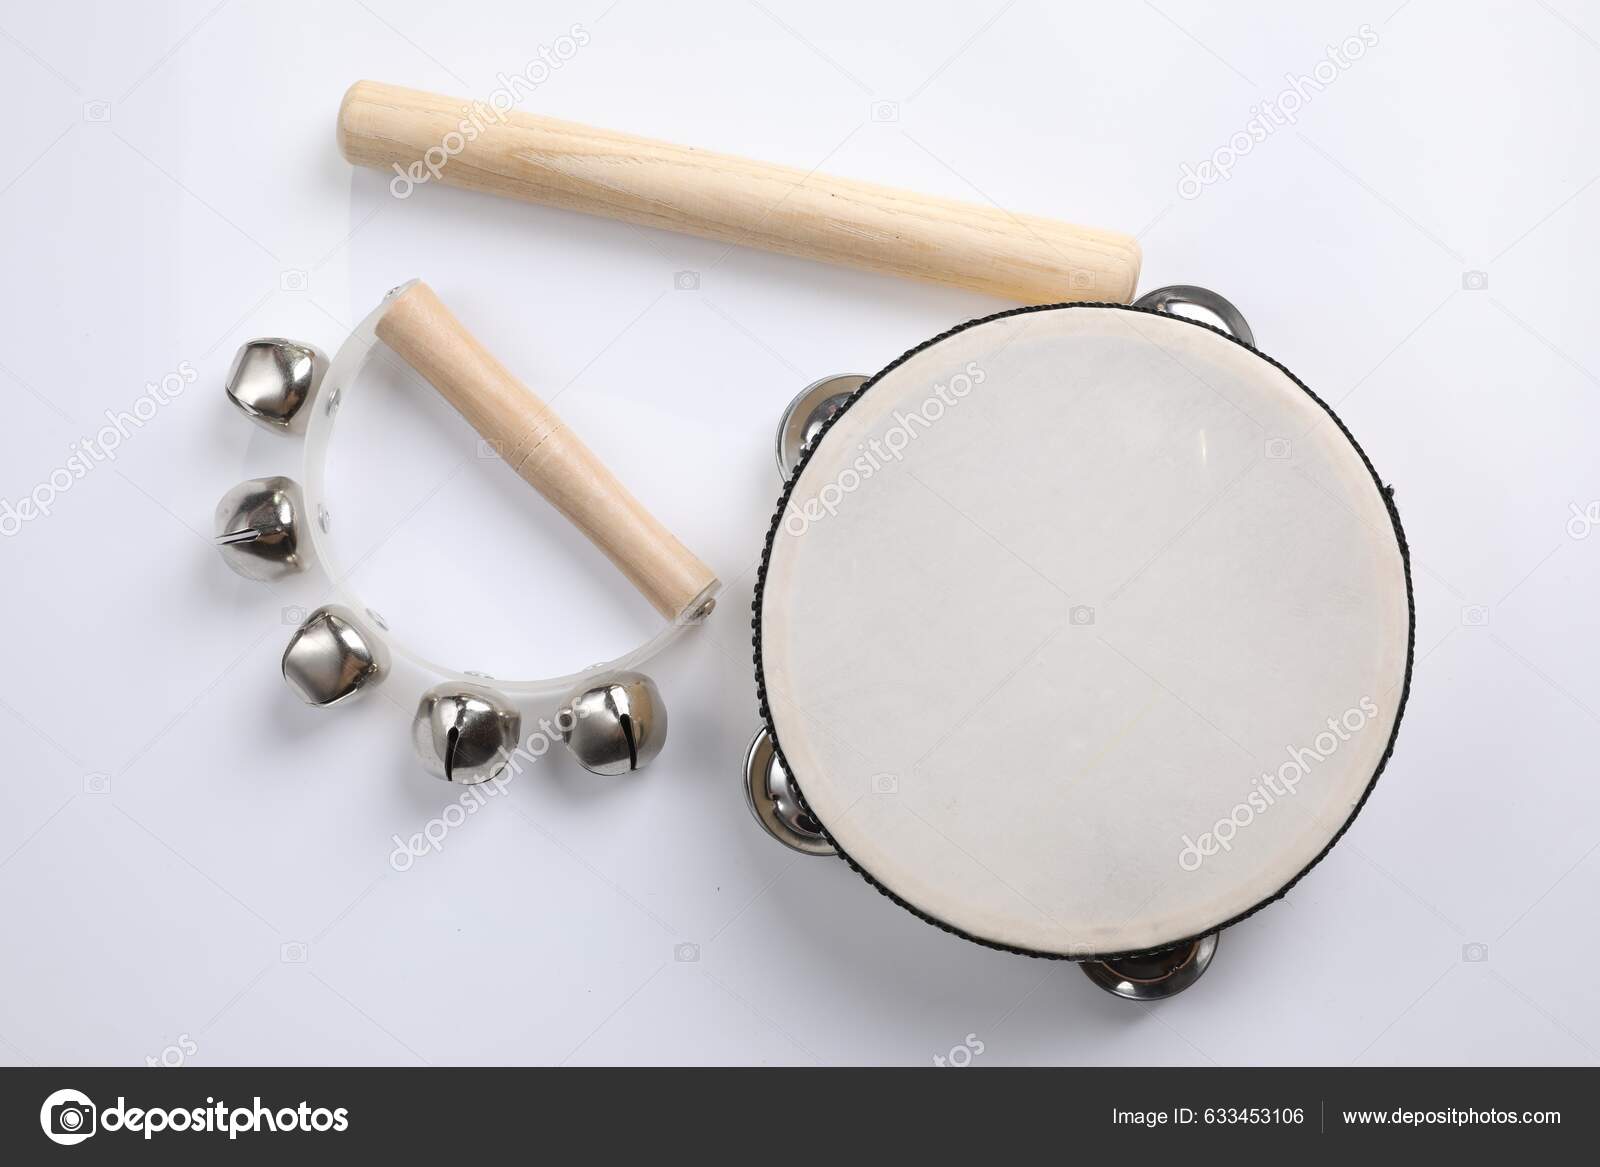 Rhythm Sticks Musical Instrument